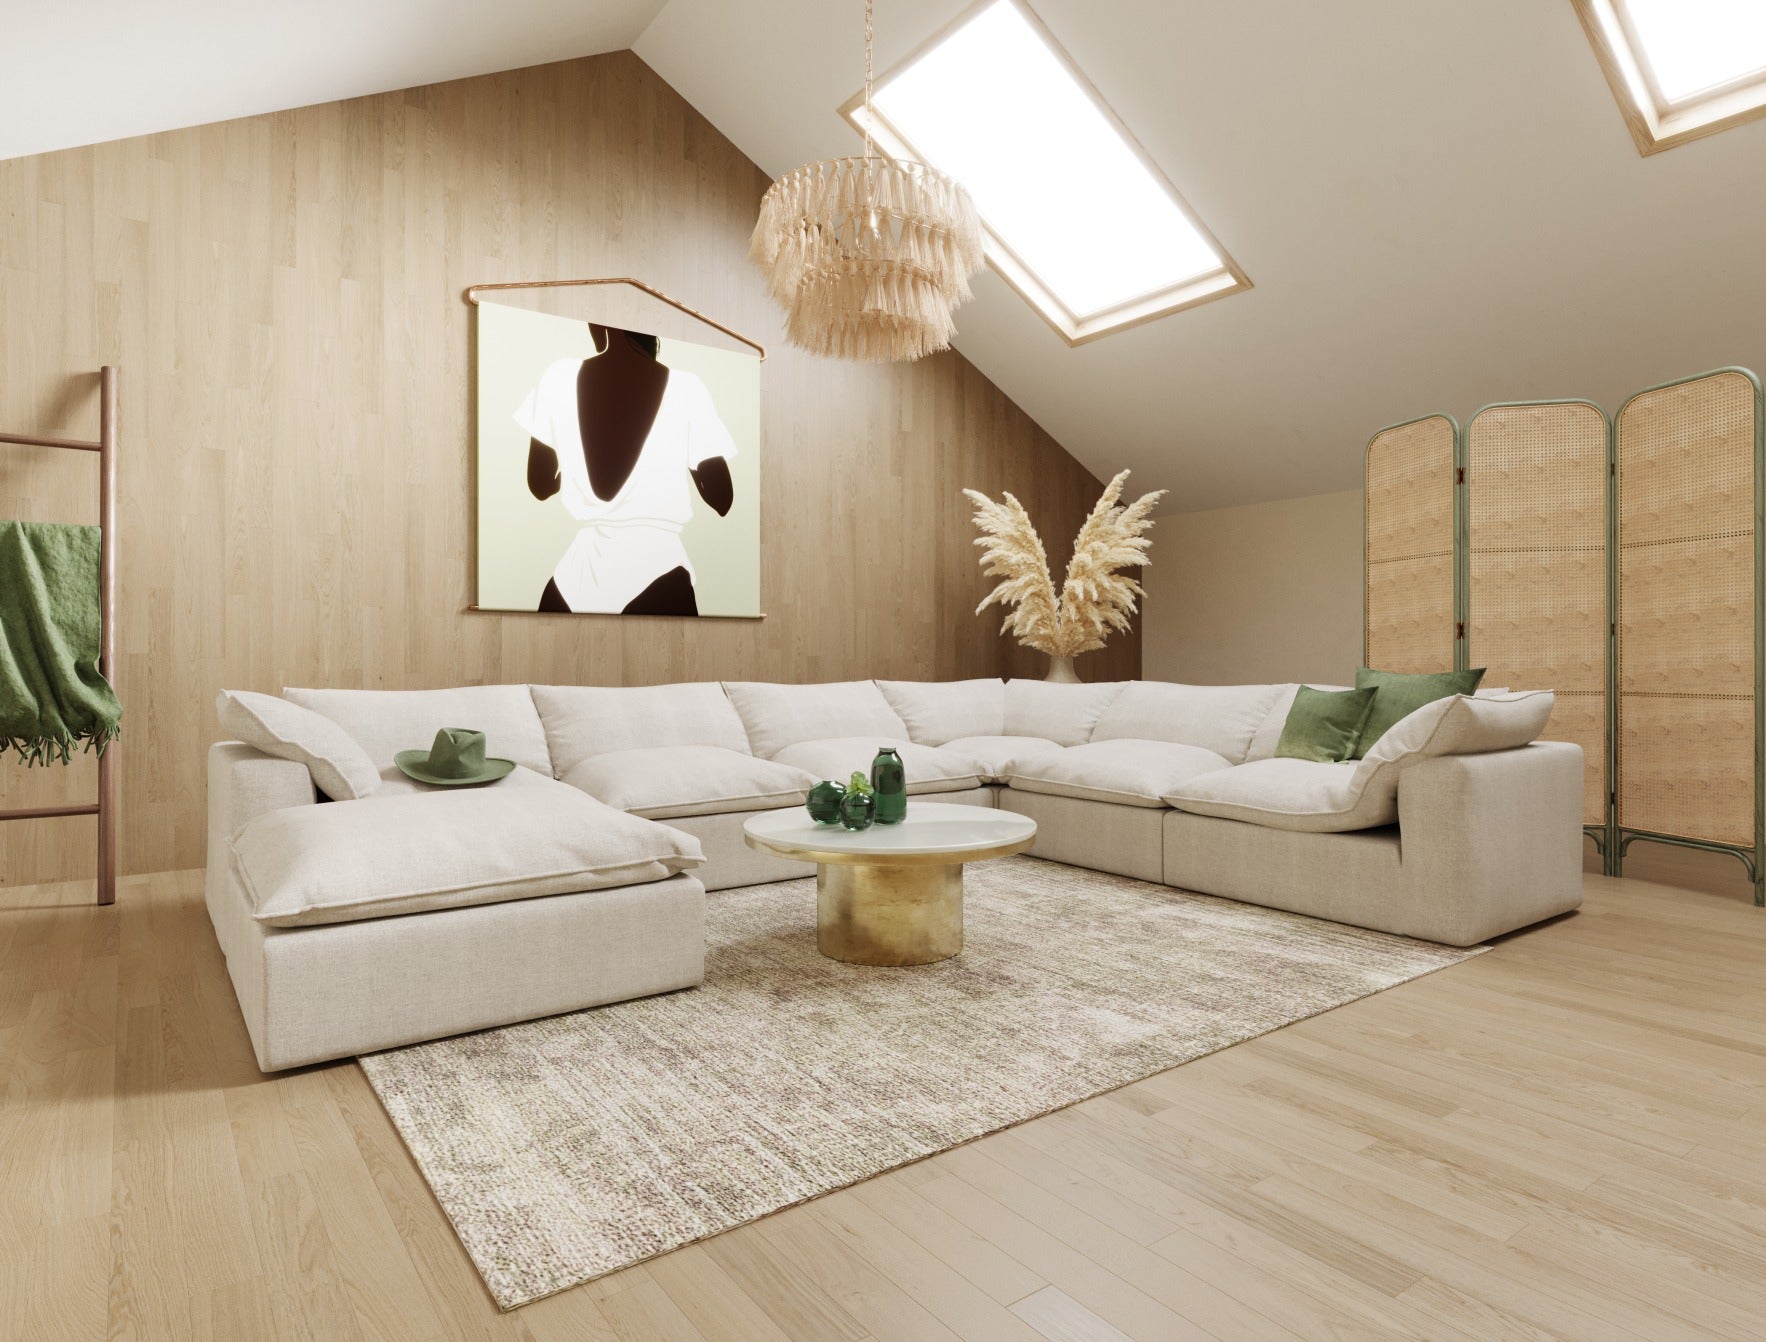 VIG Furniture Divani Casa Garman Light Grey Sectional Sofa